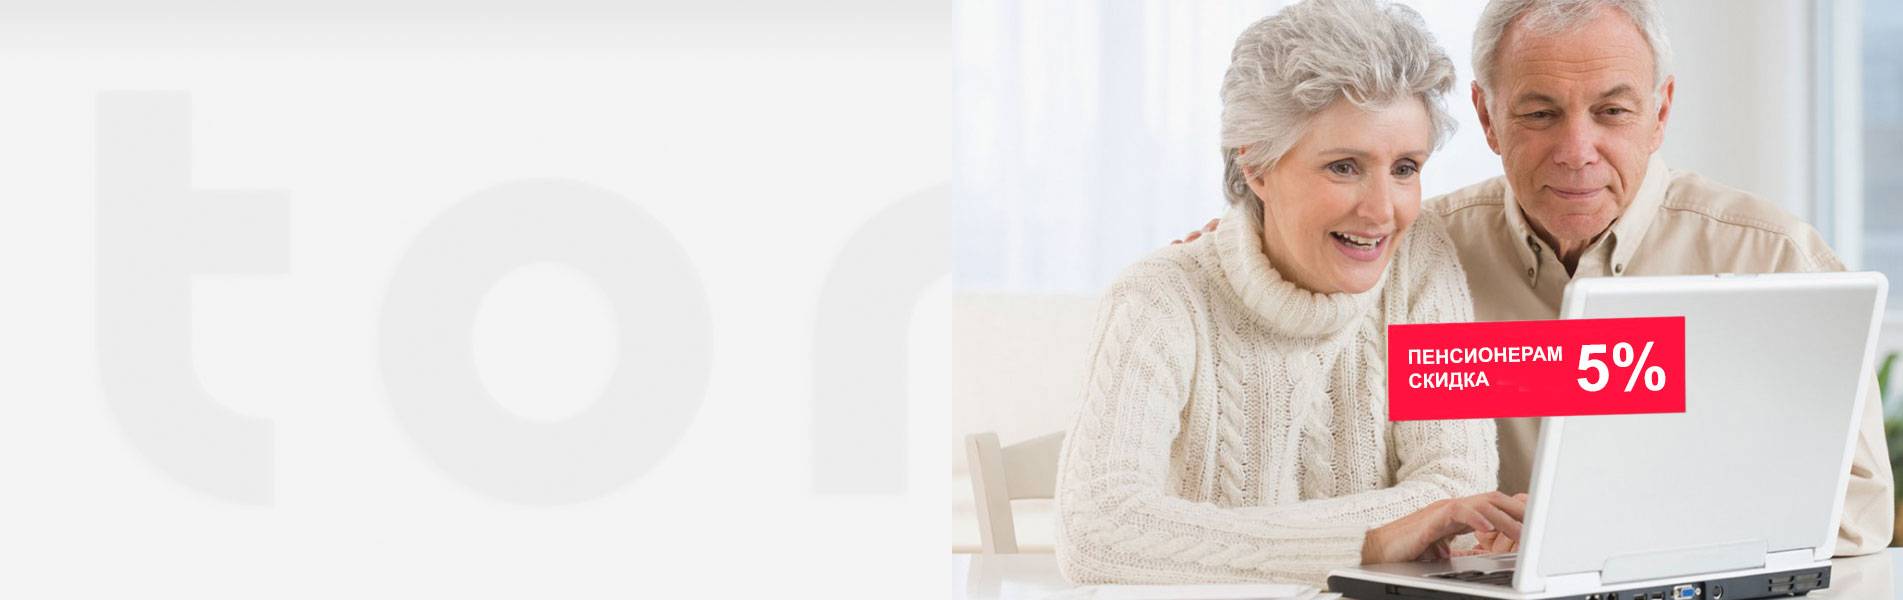 Займы пенсионерам онлайн, взять микрозайм пенсионерам до 75-80 лет